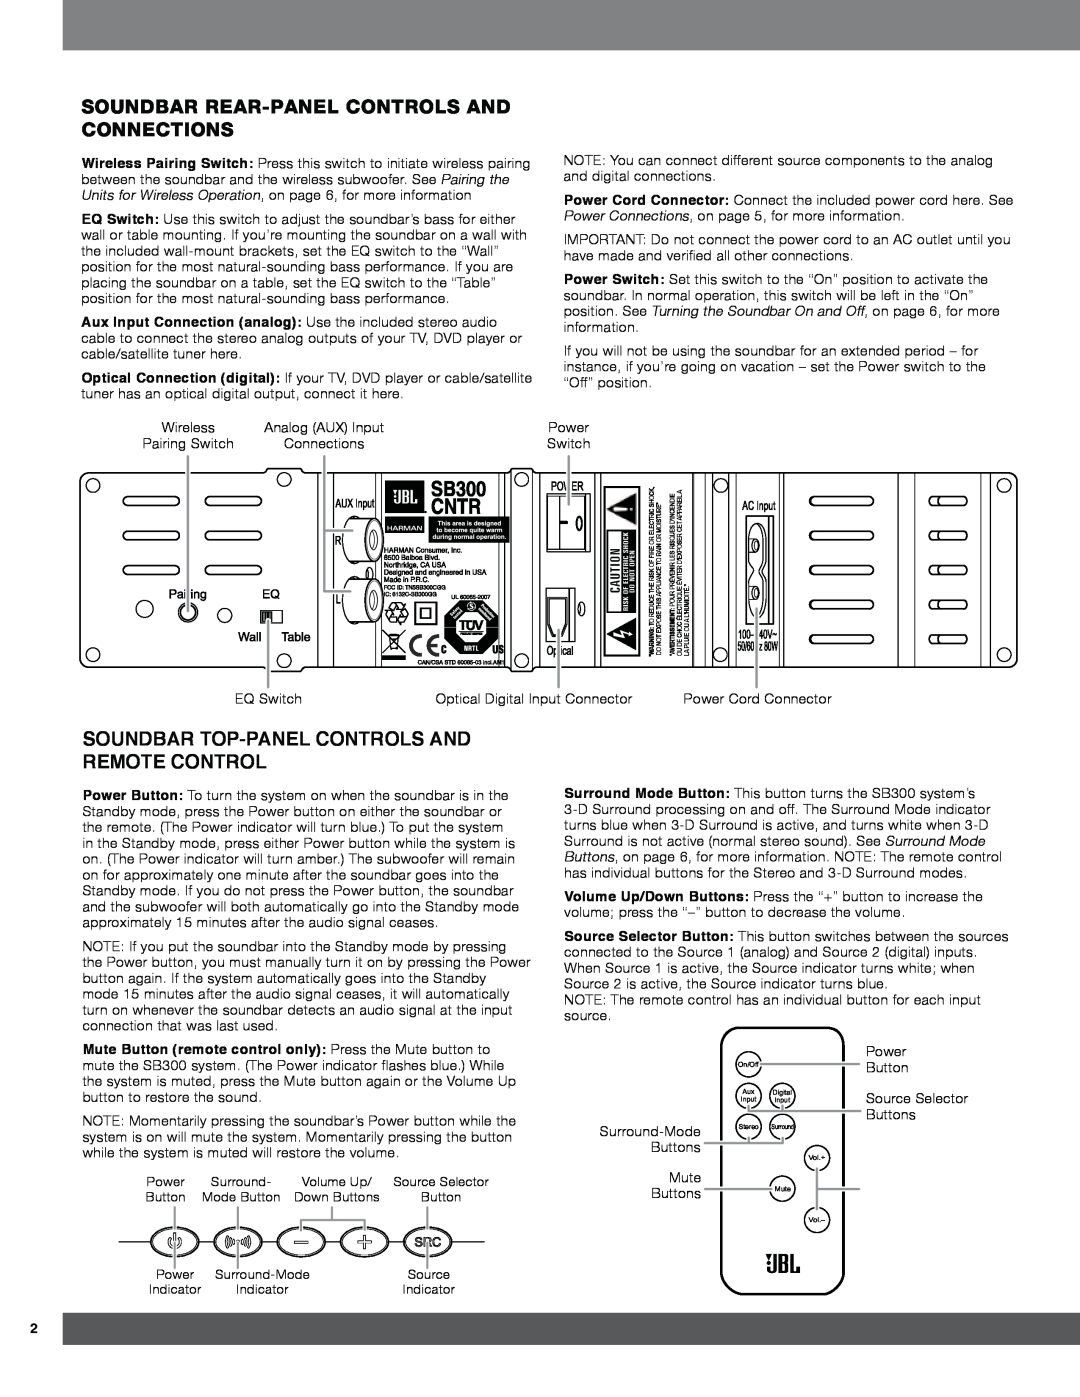 JBL SB300 Soundbar Rear-Panelcontrols And Connections, 6281%$57233$1/&21752/6$1 5027&21752, Analog AUX Input, Power 